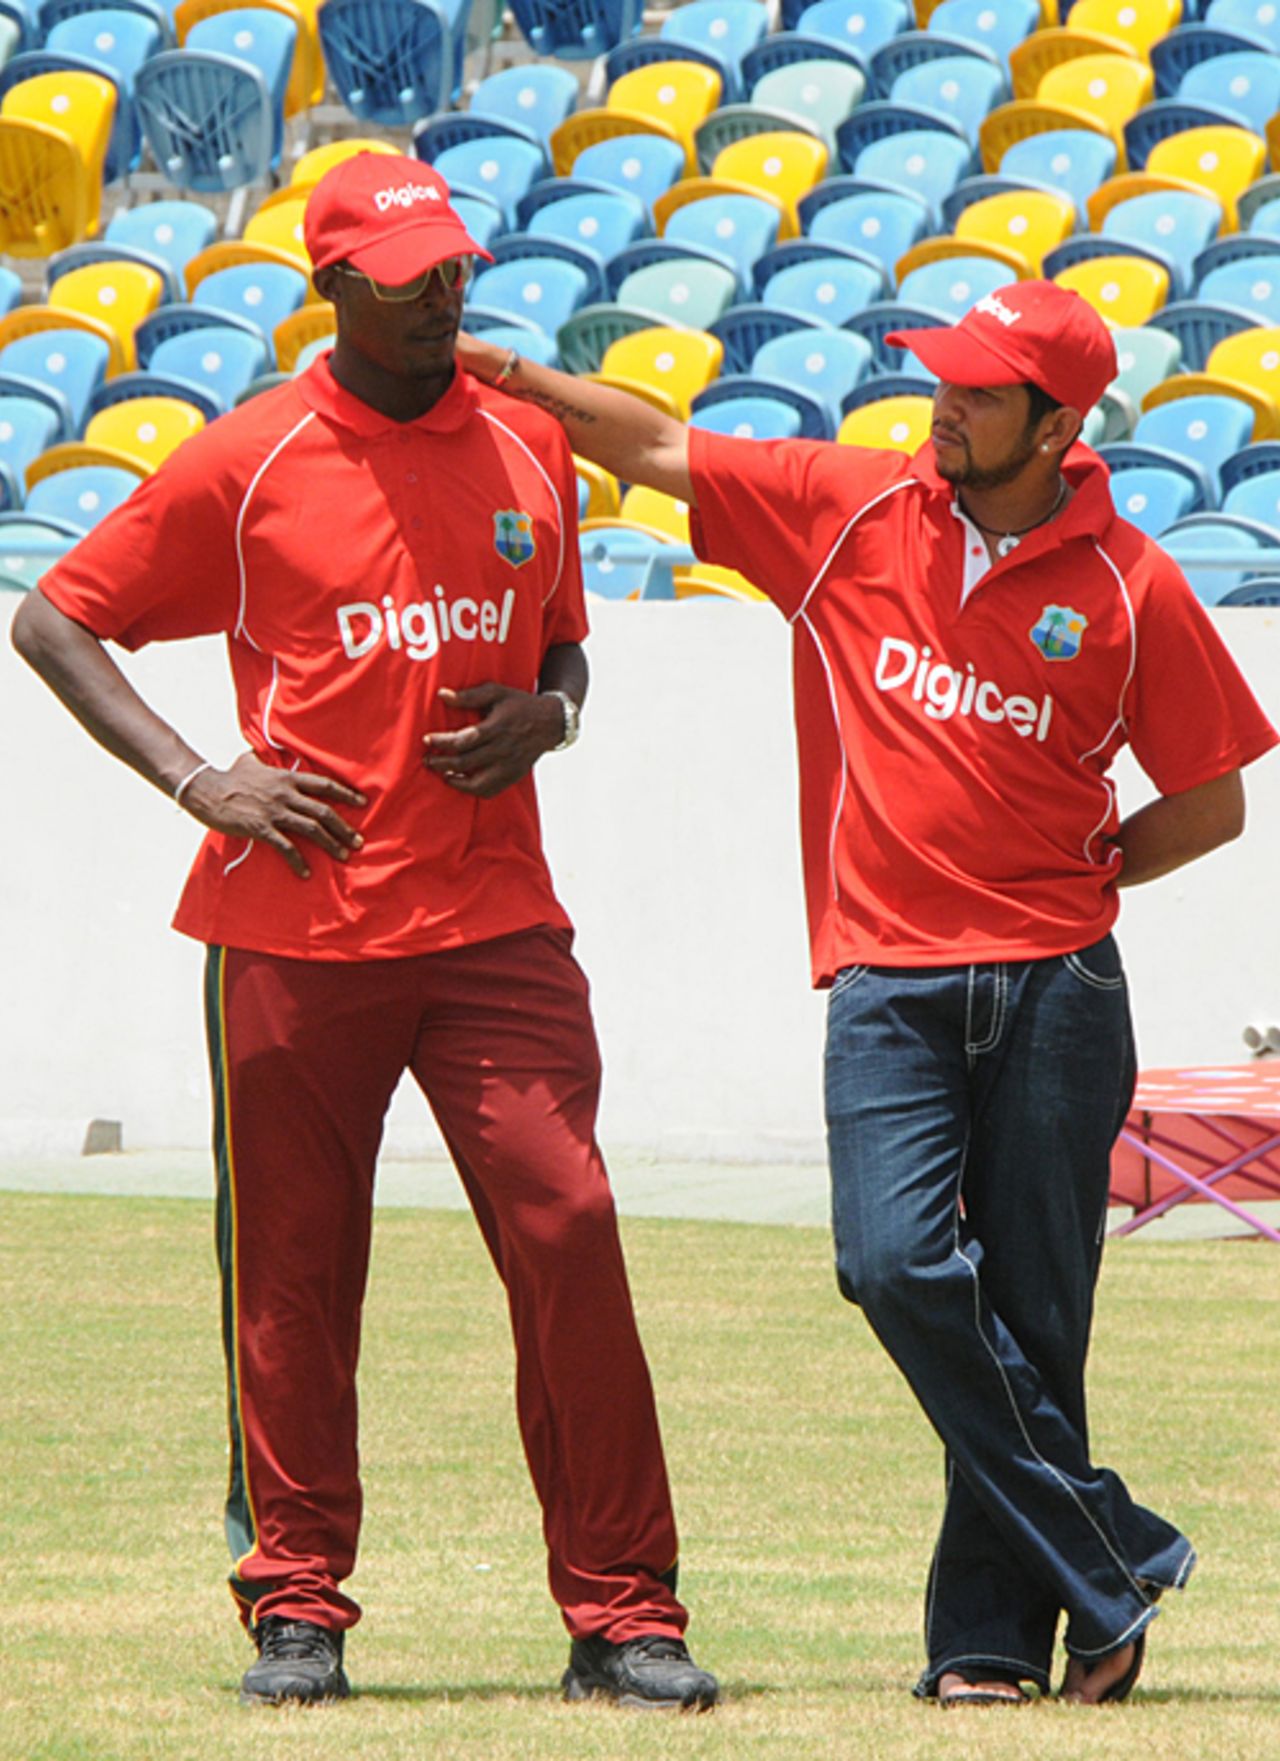 Vasbert Drakes and Ramnaresh Sarwan attend a Digicel Cricket Clinic, Barbados, September 6, 2009